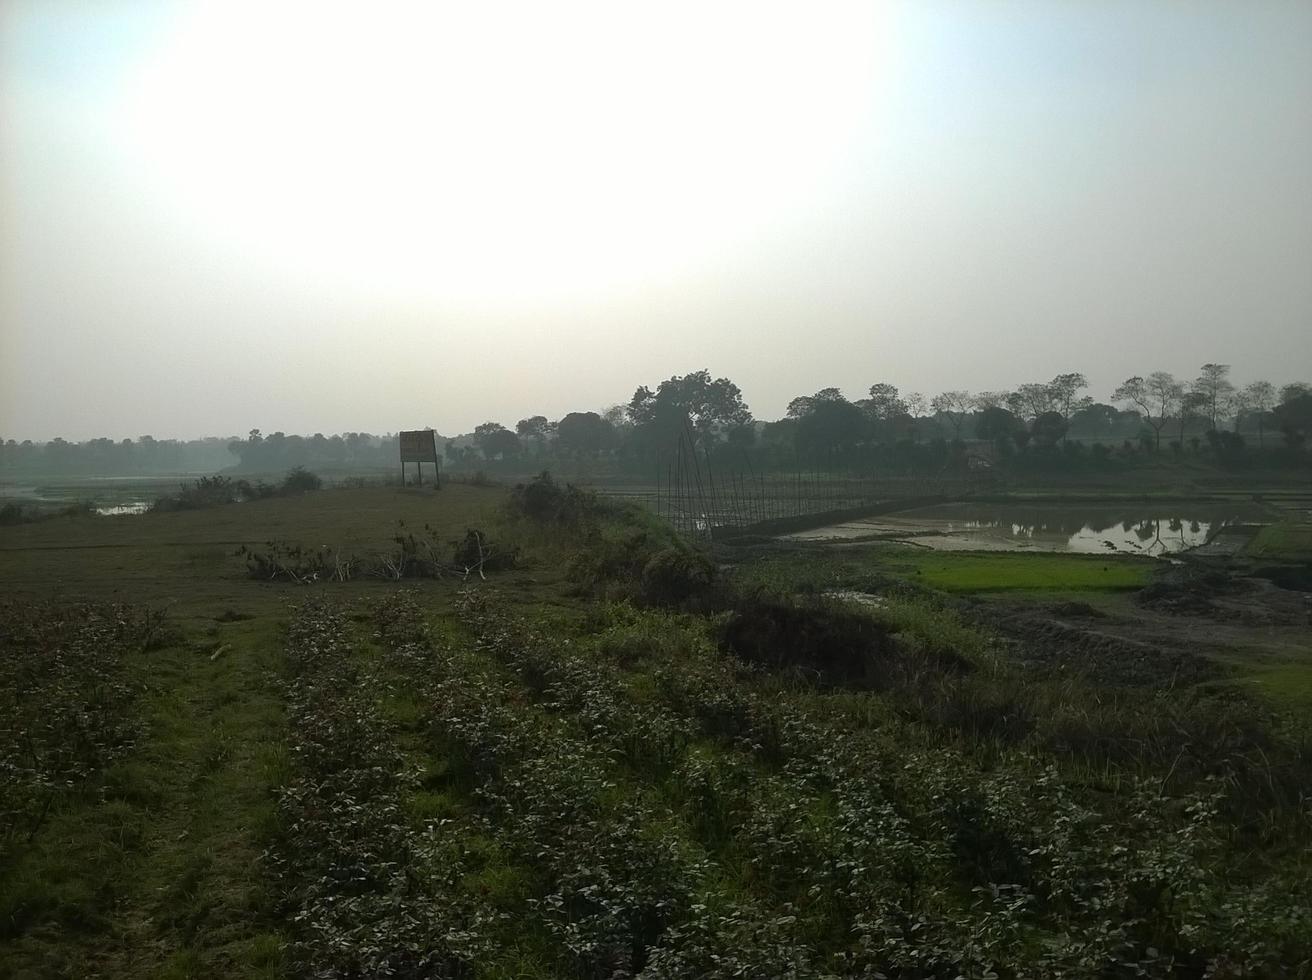 The Village field photo